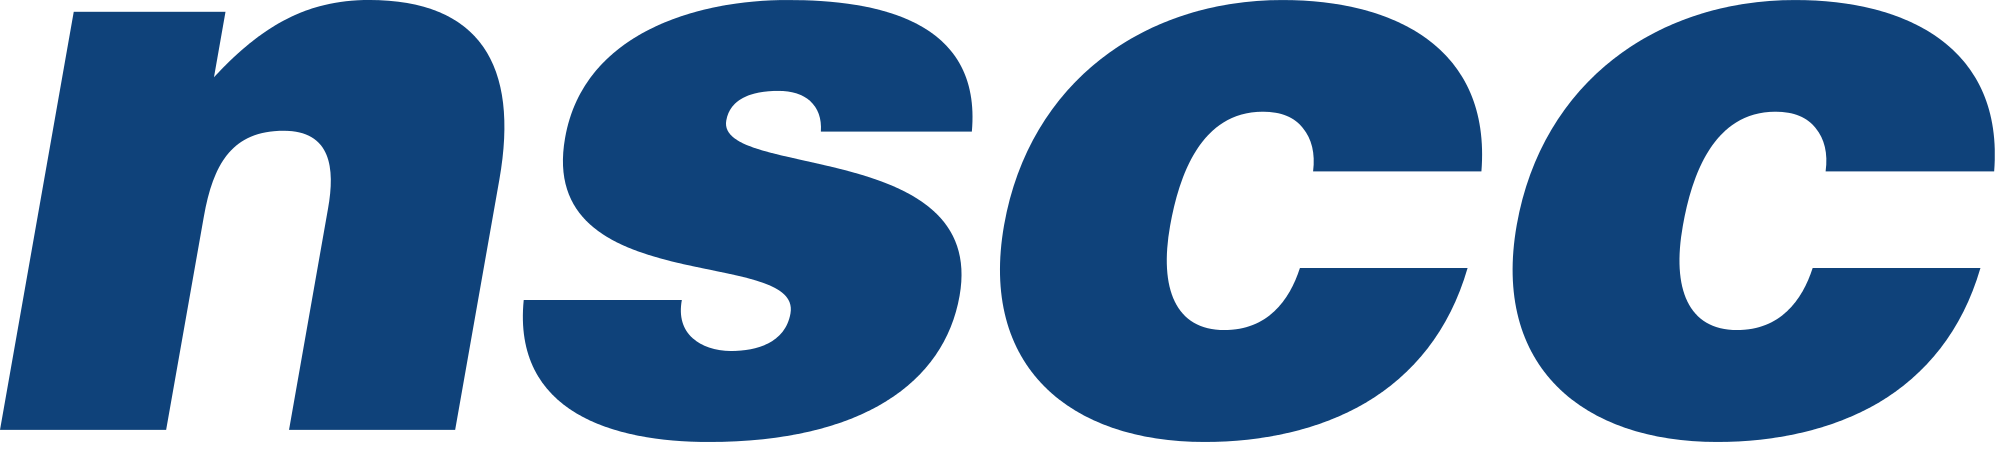 NSCC_logo.png